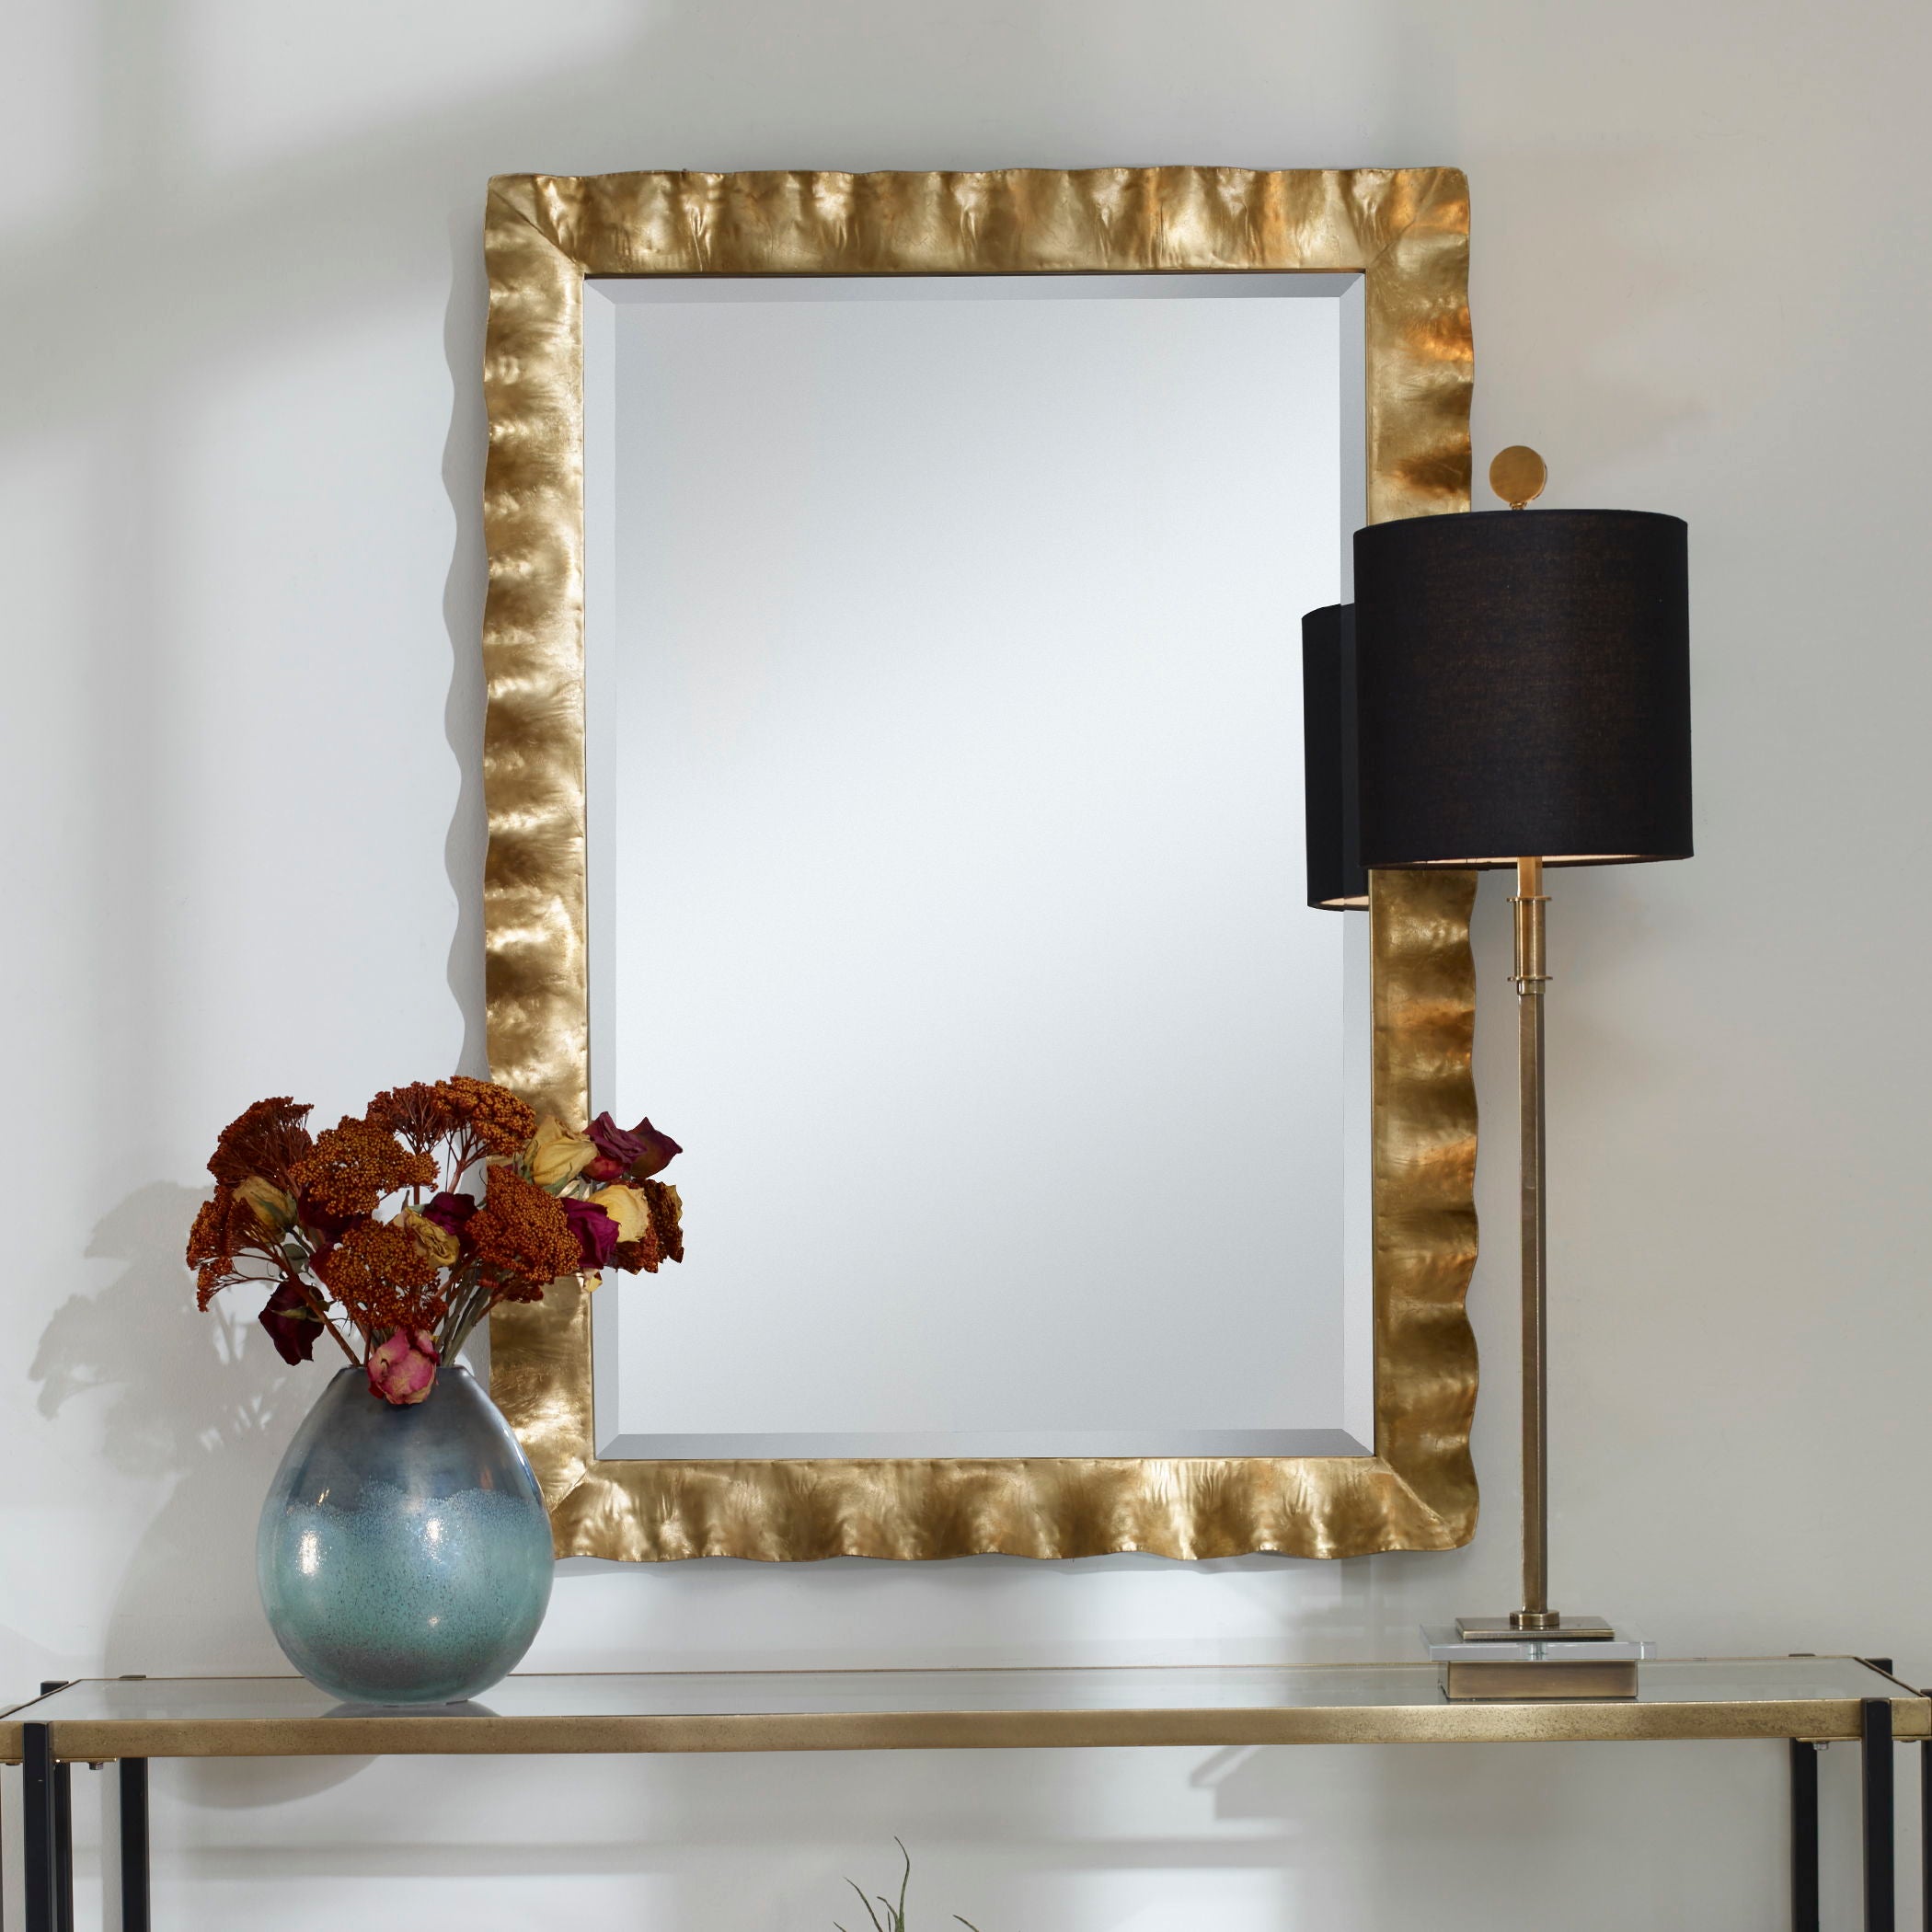 Haya - Scalloped Mirror - Gold